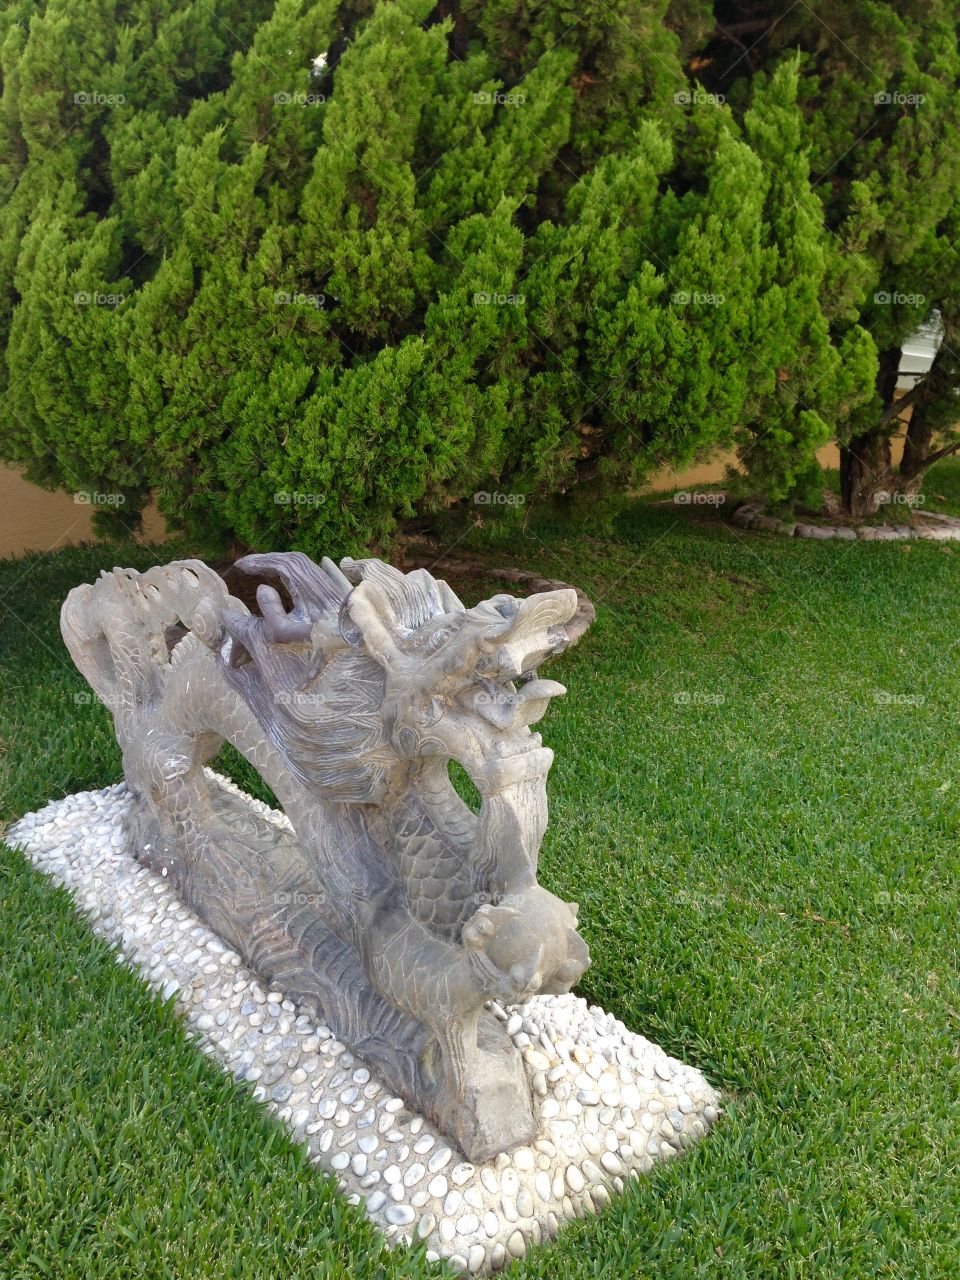 Dragon statues